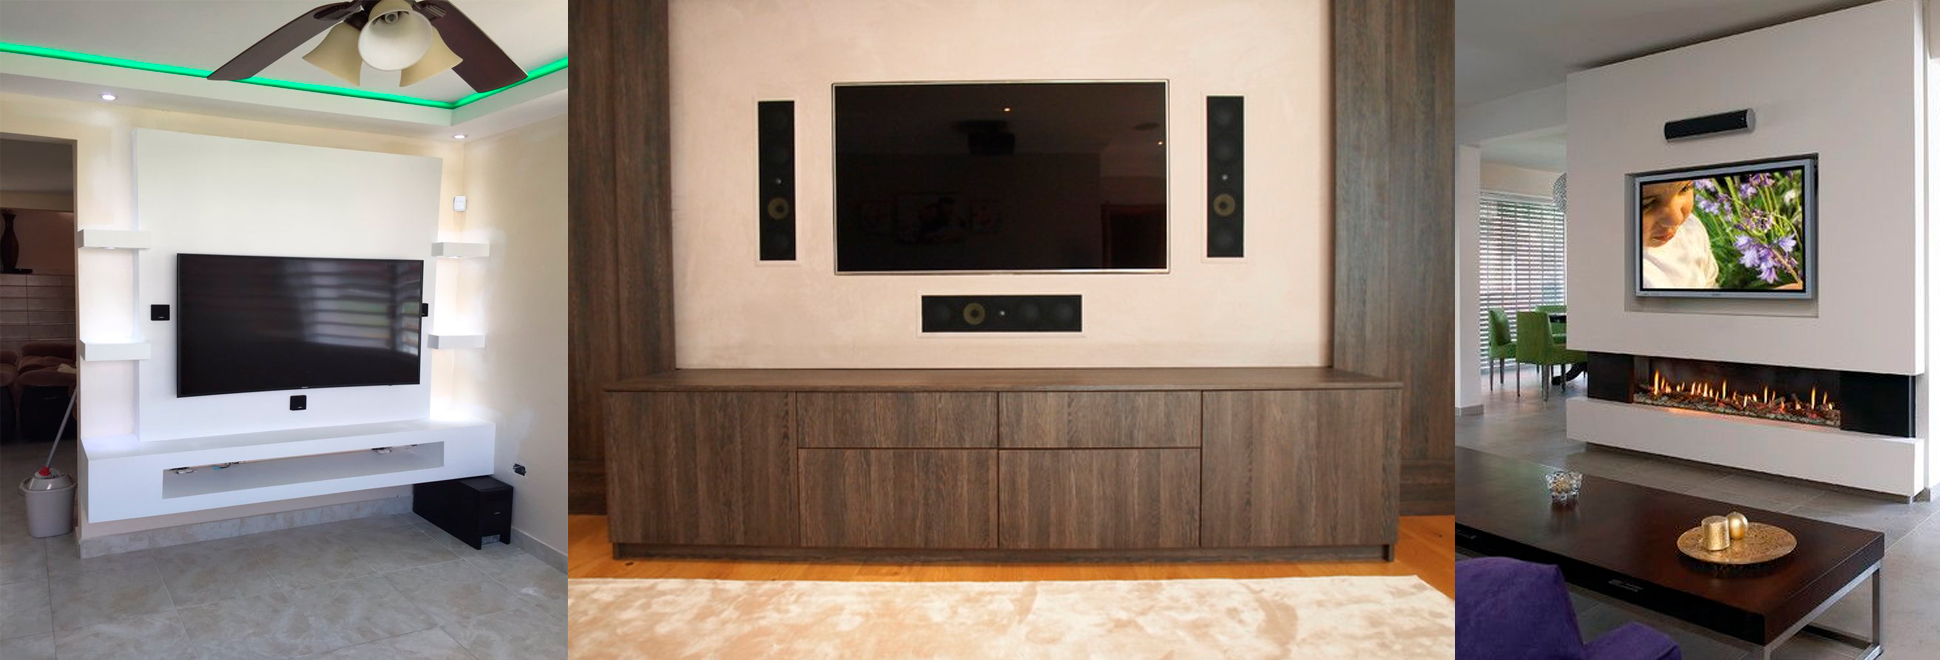 Instalacion de televisor de drywall o panel de madera